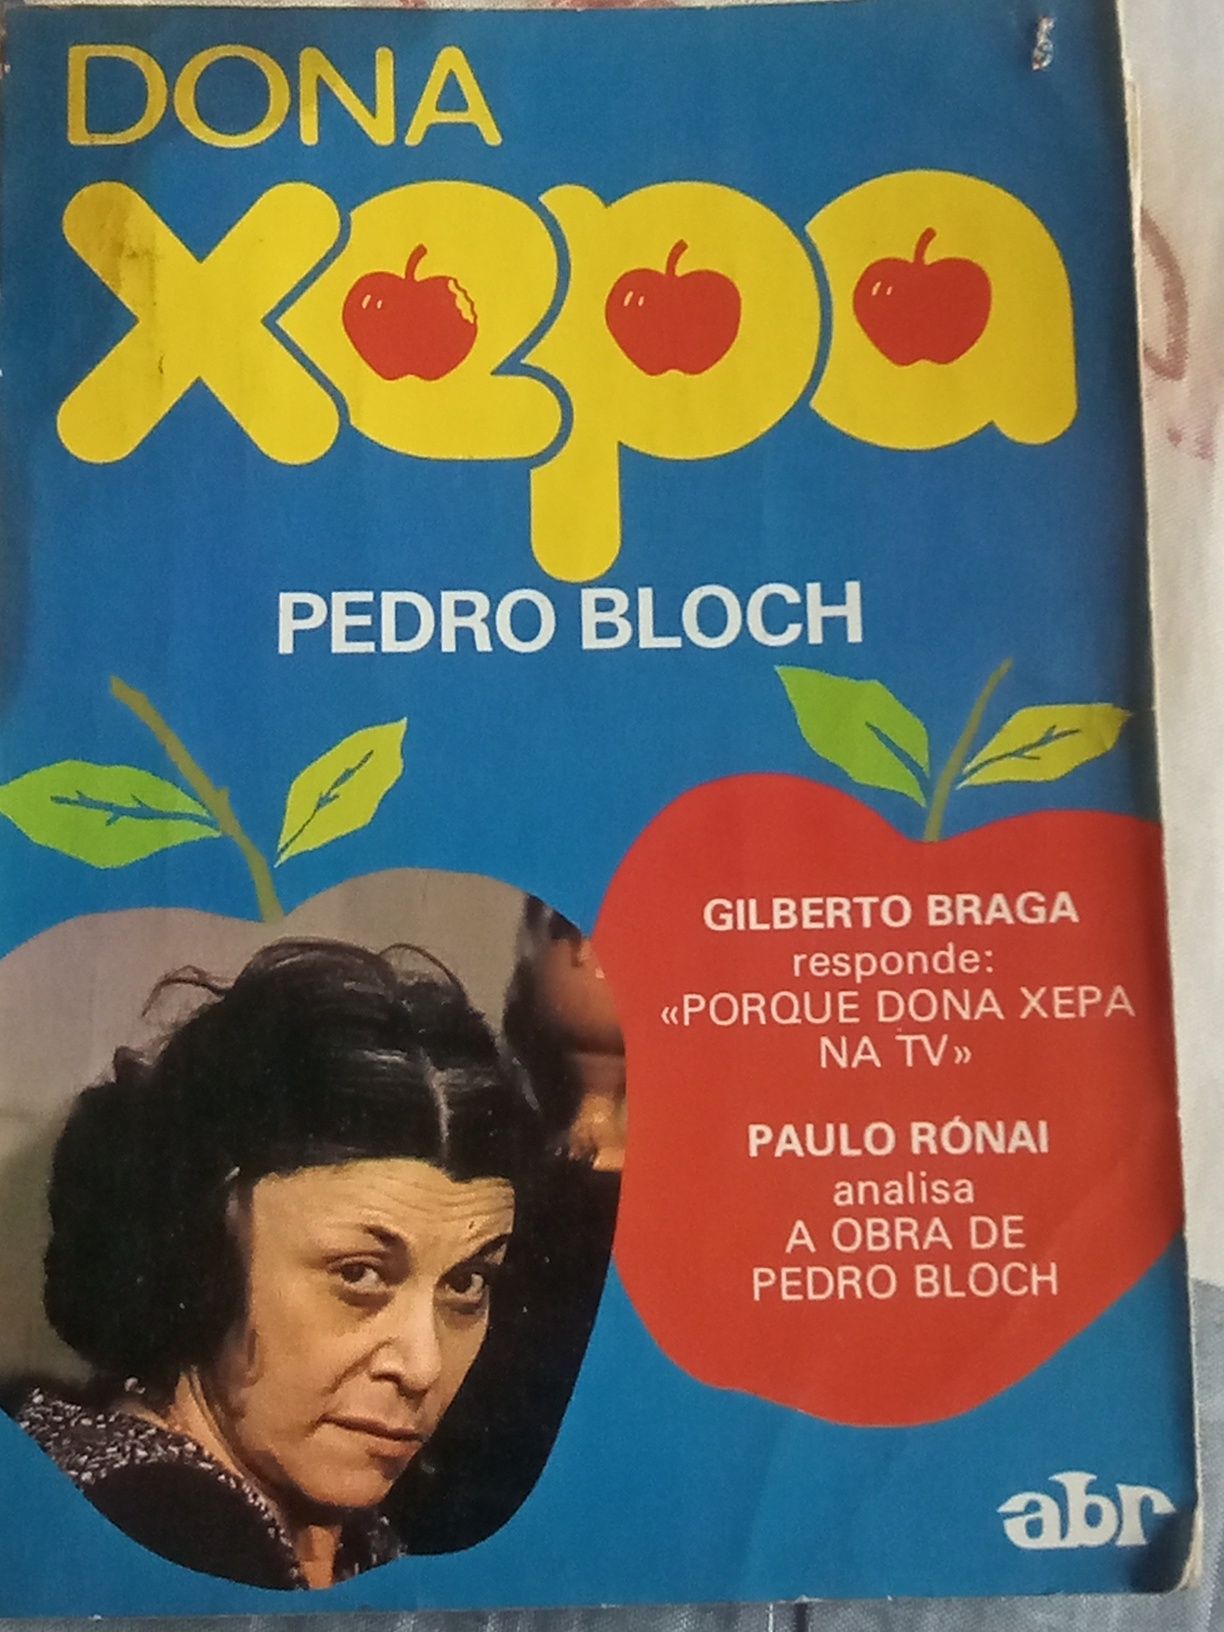 Dona xepa de Pedro Bloch